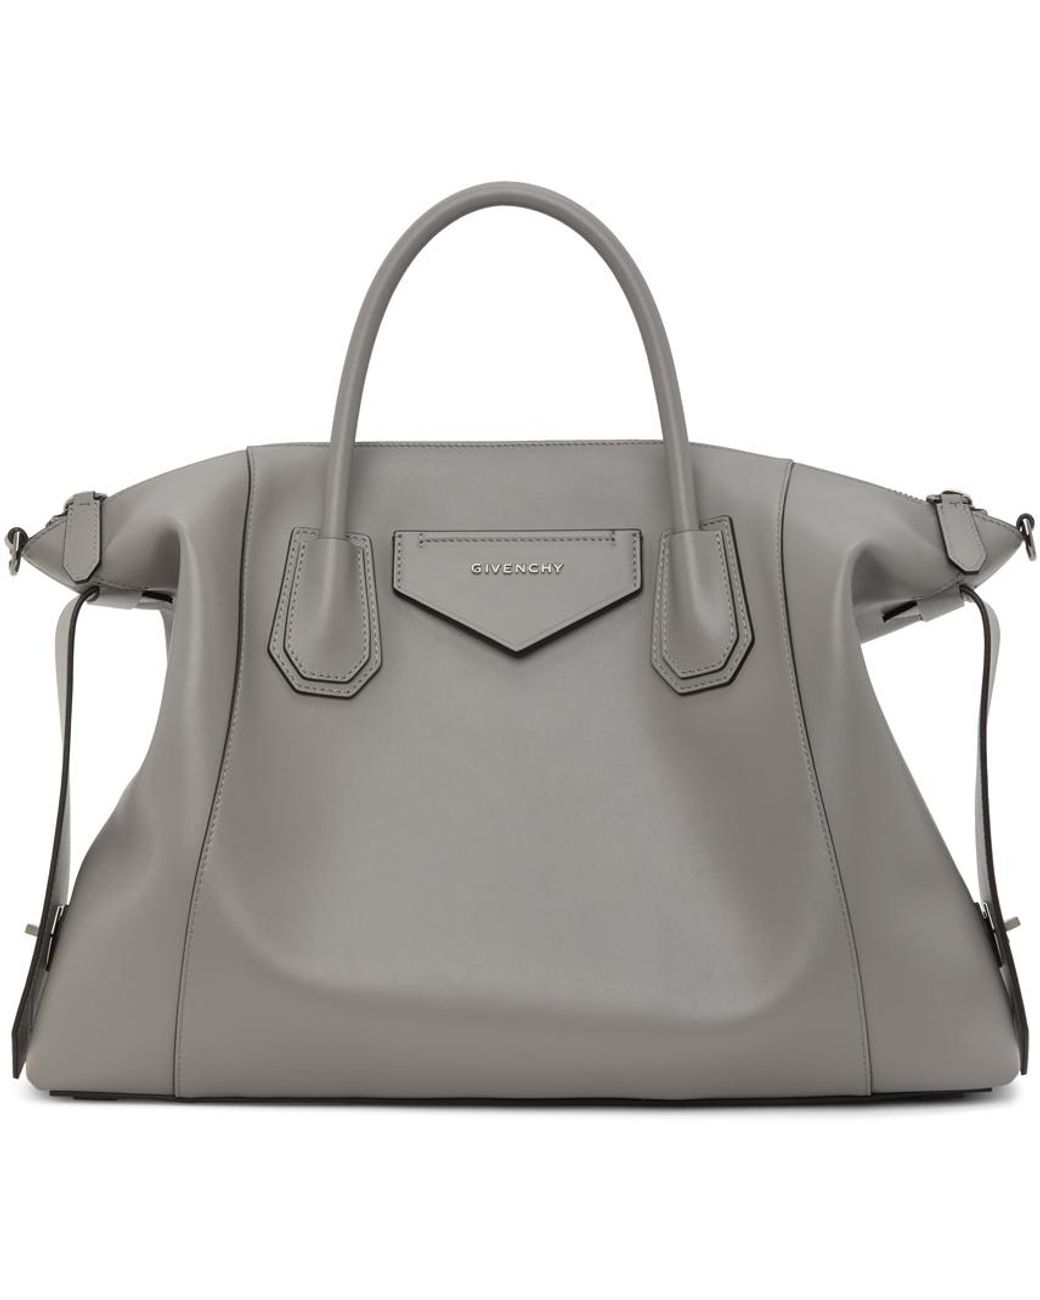 Givenchy Grey Large Soft Antigona Bag in Gray | Lyst